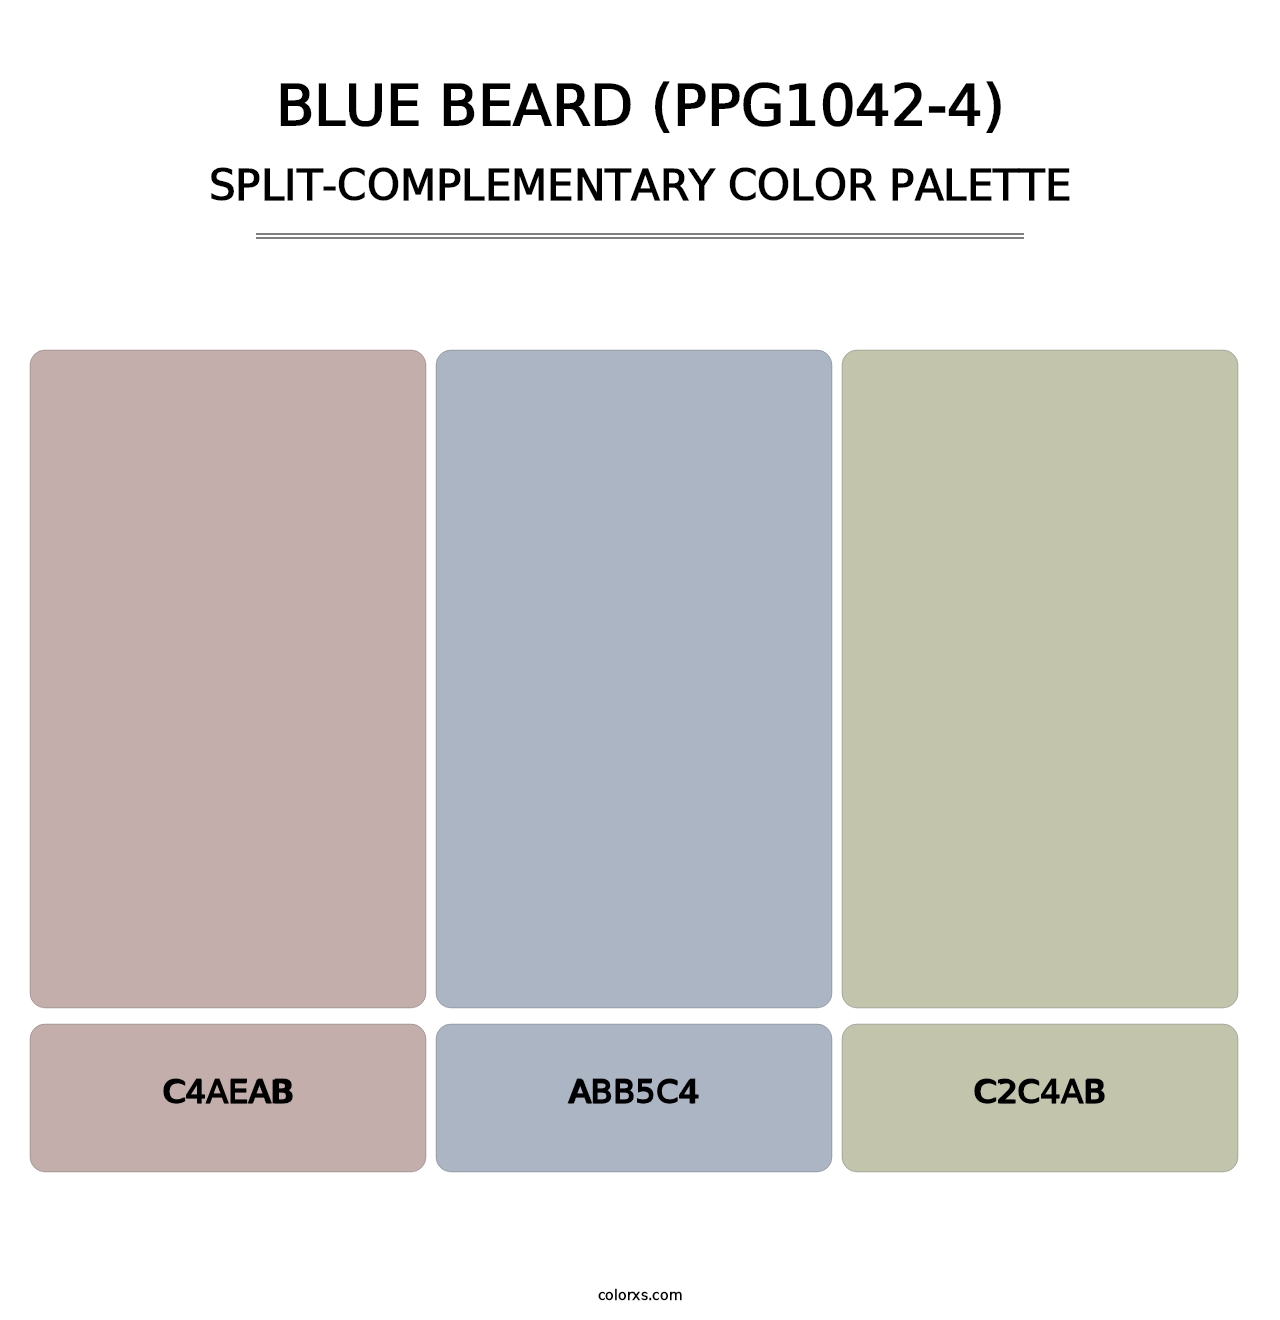 Blue Beard (PPG1042-4) - Split-Complementary Color Palette